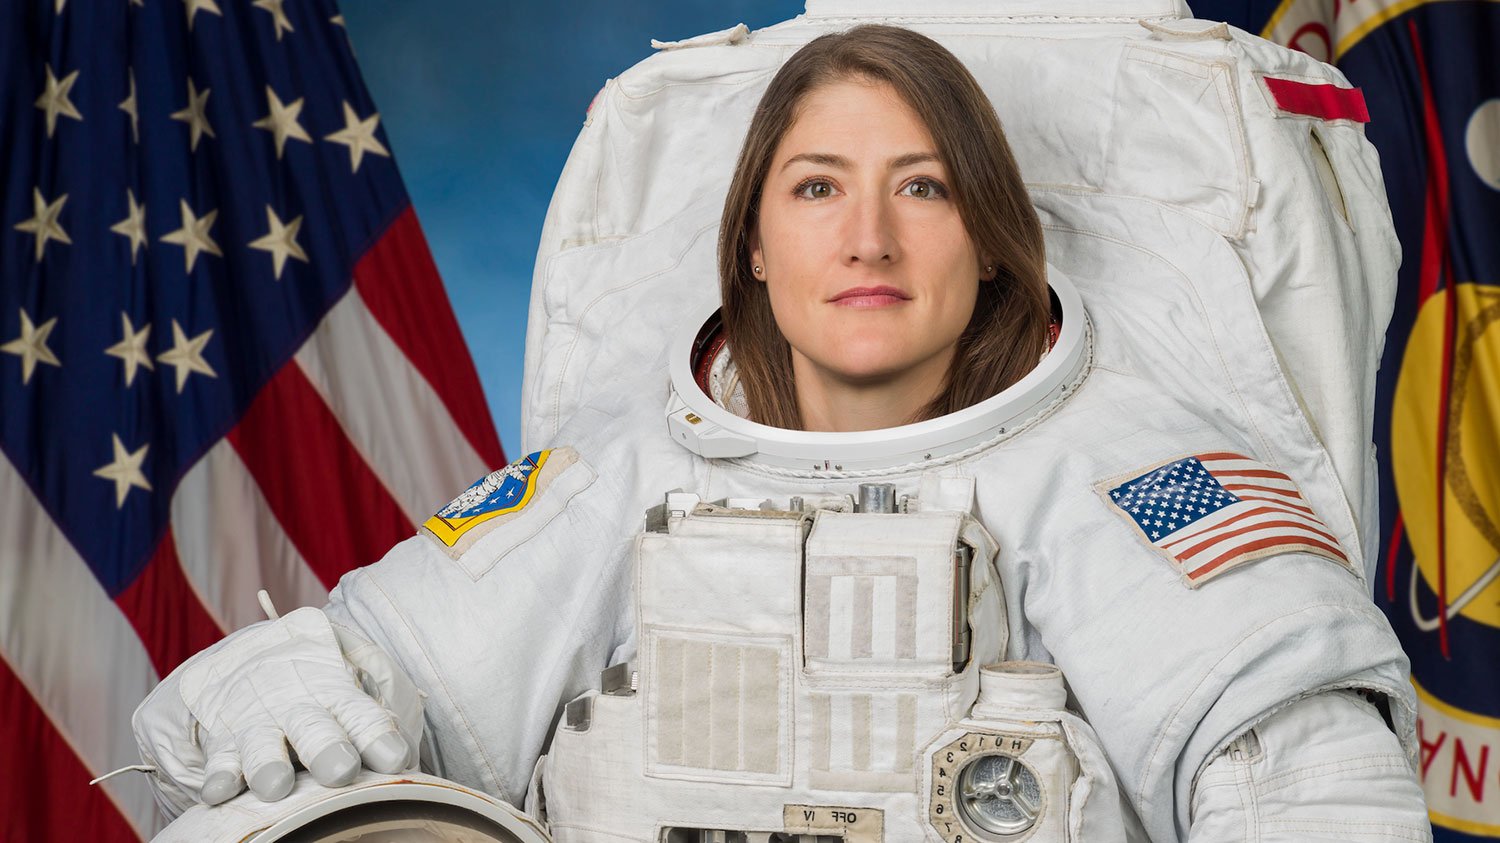 NC State alumna and astronaut Christina Koch